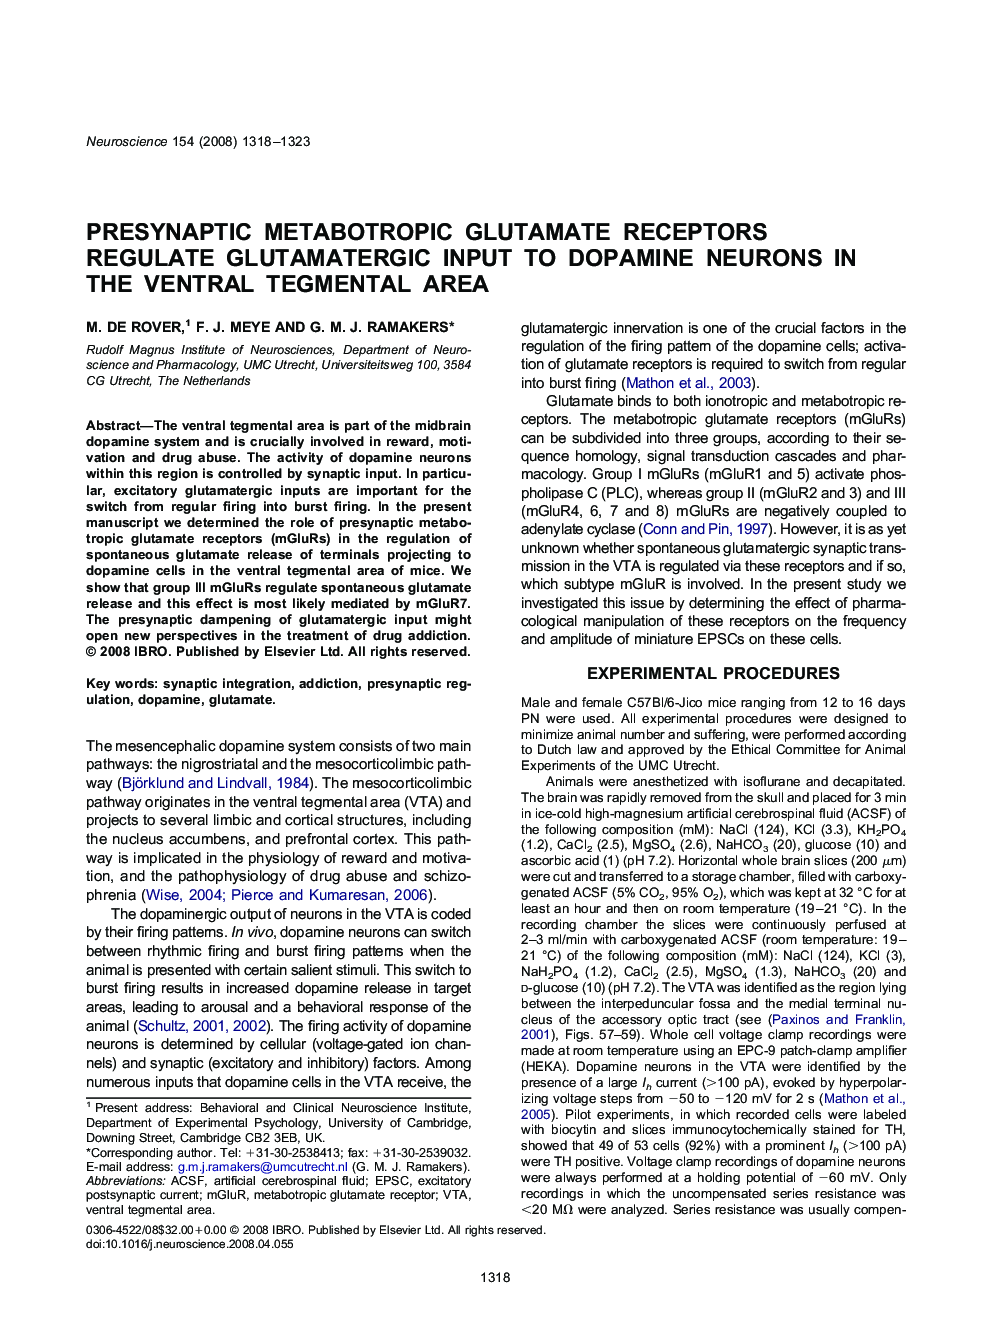 Presynaptic metabotropic glutamate receptors regulate glutamatergic input to dopamine neurons in the ventral tegmental area